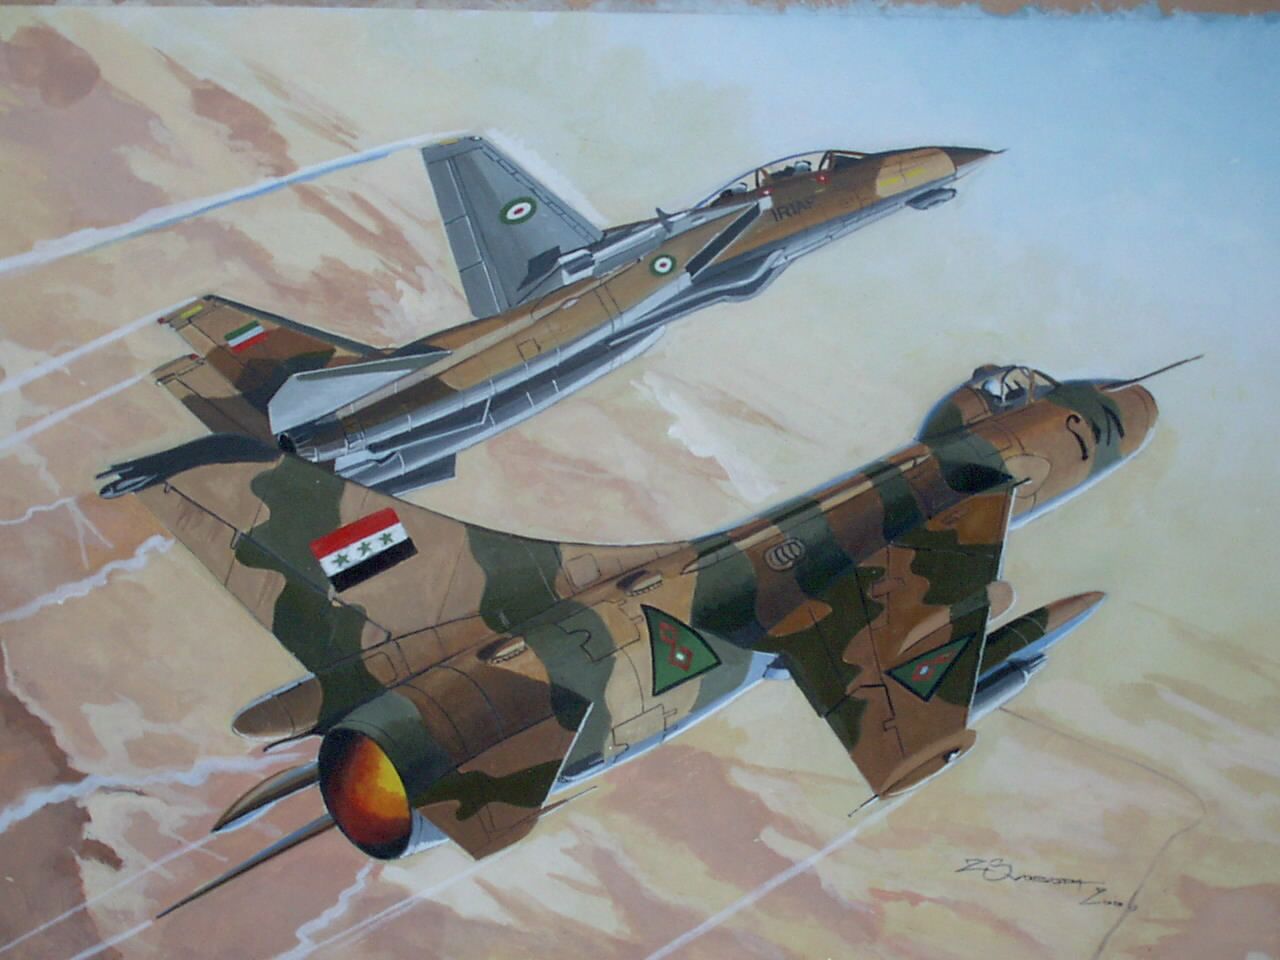 IRANIAN F-14 AND SU-7